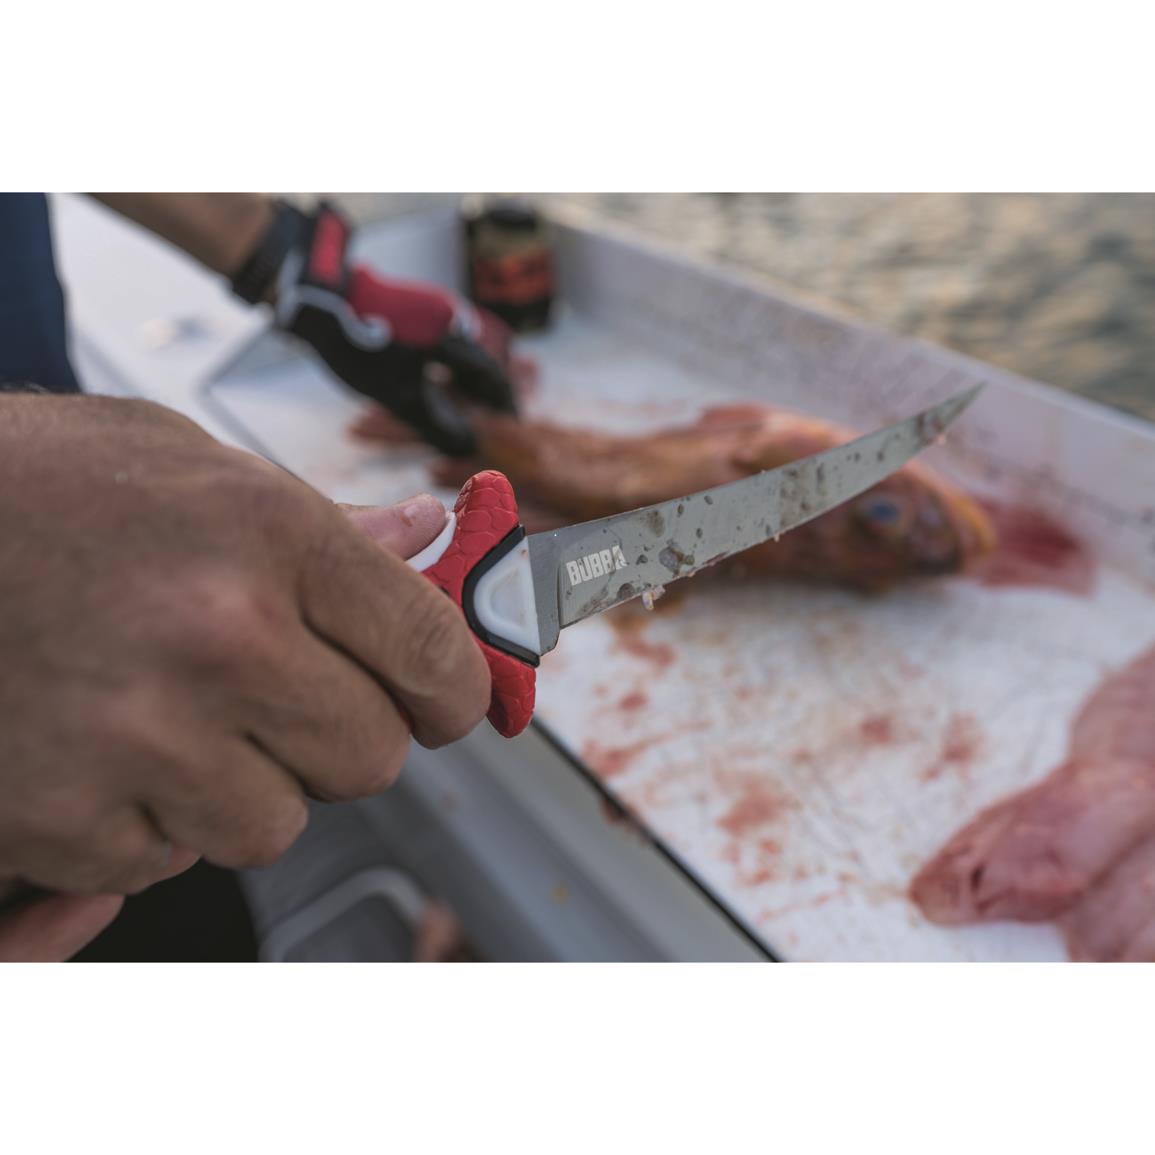 Bubba® Ultra Flex Fillet Knife